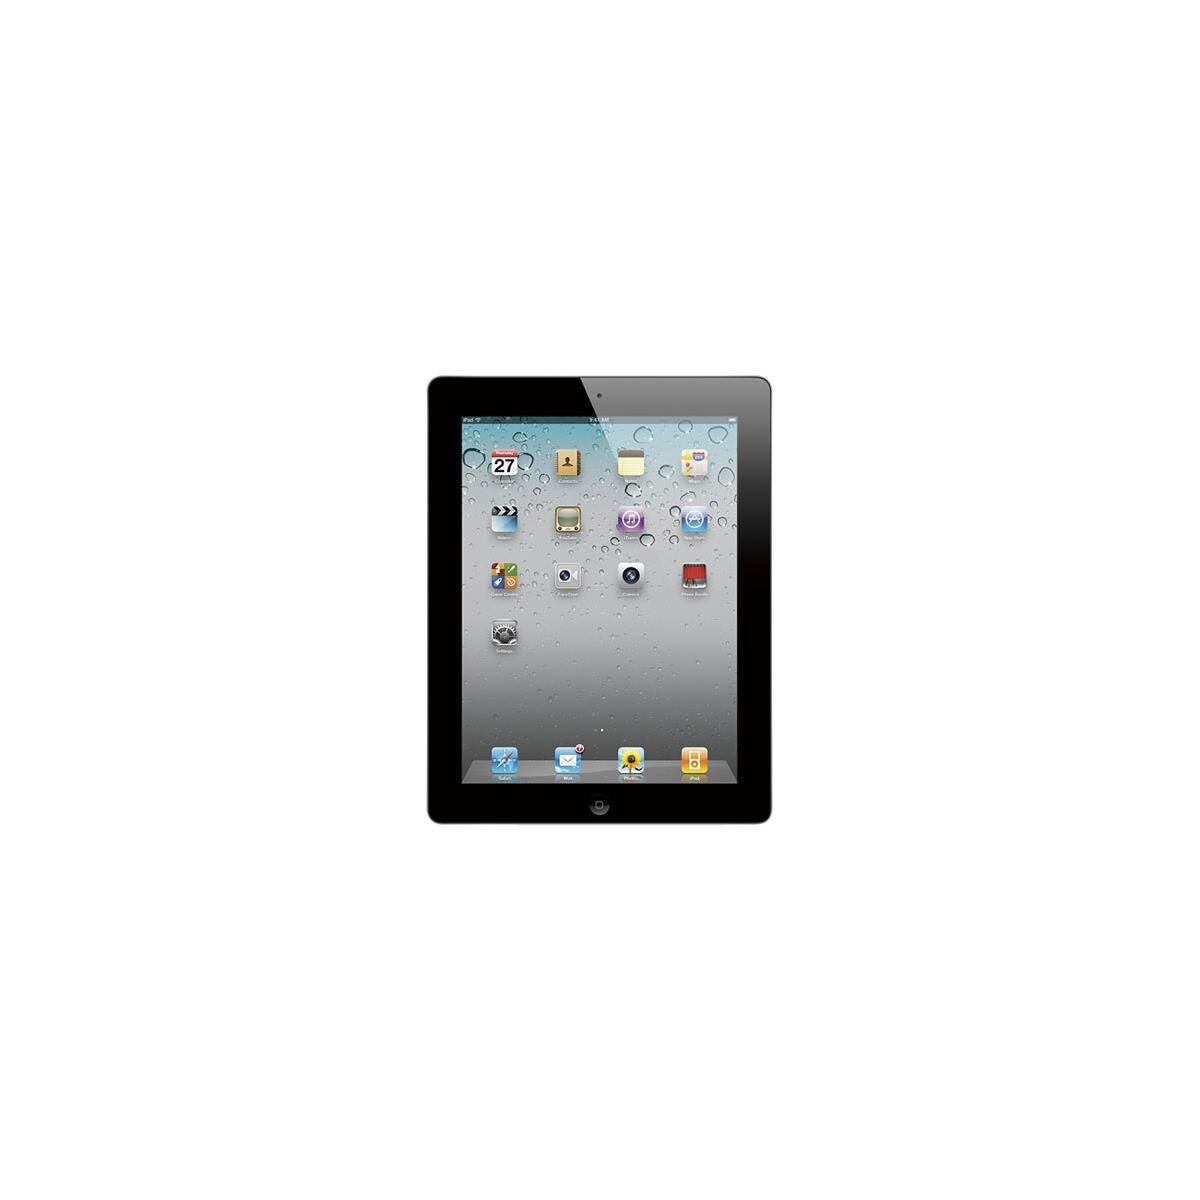 Apple 16GB iPad 2 Tablet with 802.11n Wi-Fi, Black